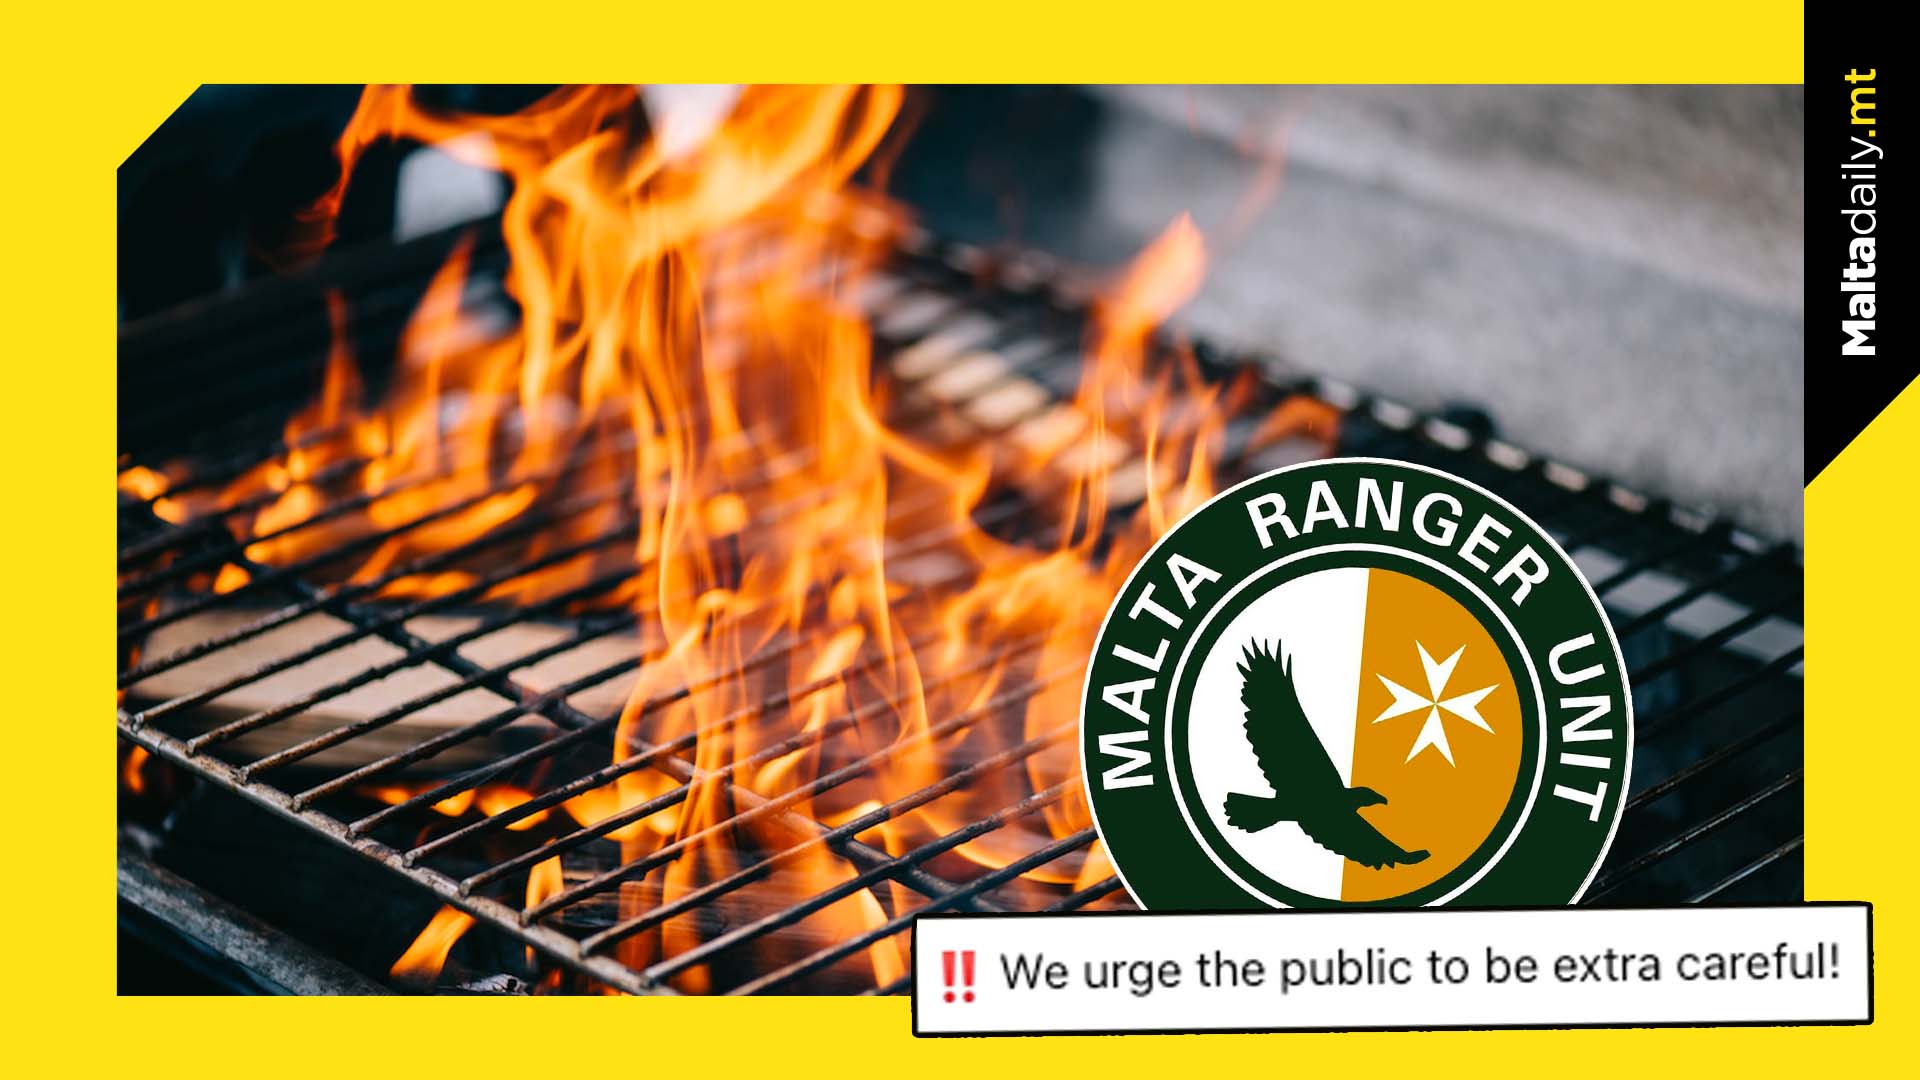 Malta Rangers Urge Public To Avoid Making Fires